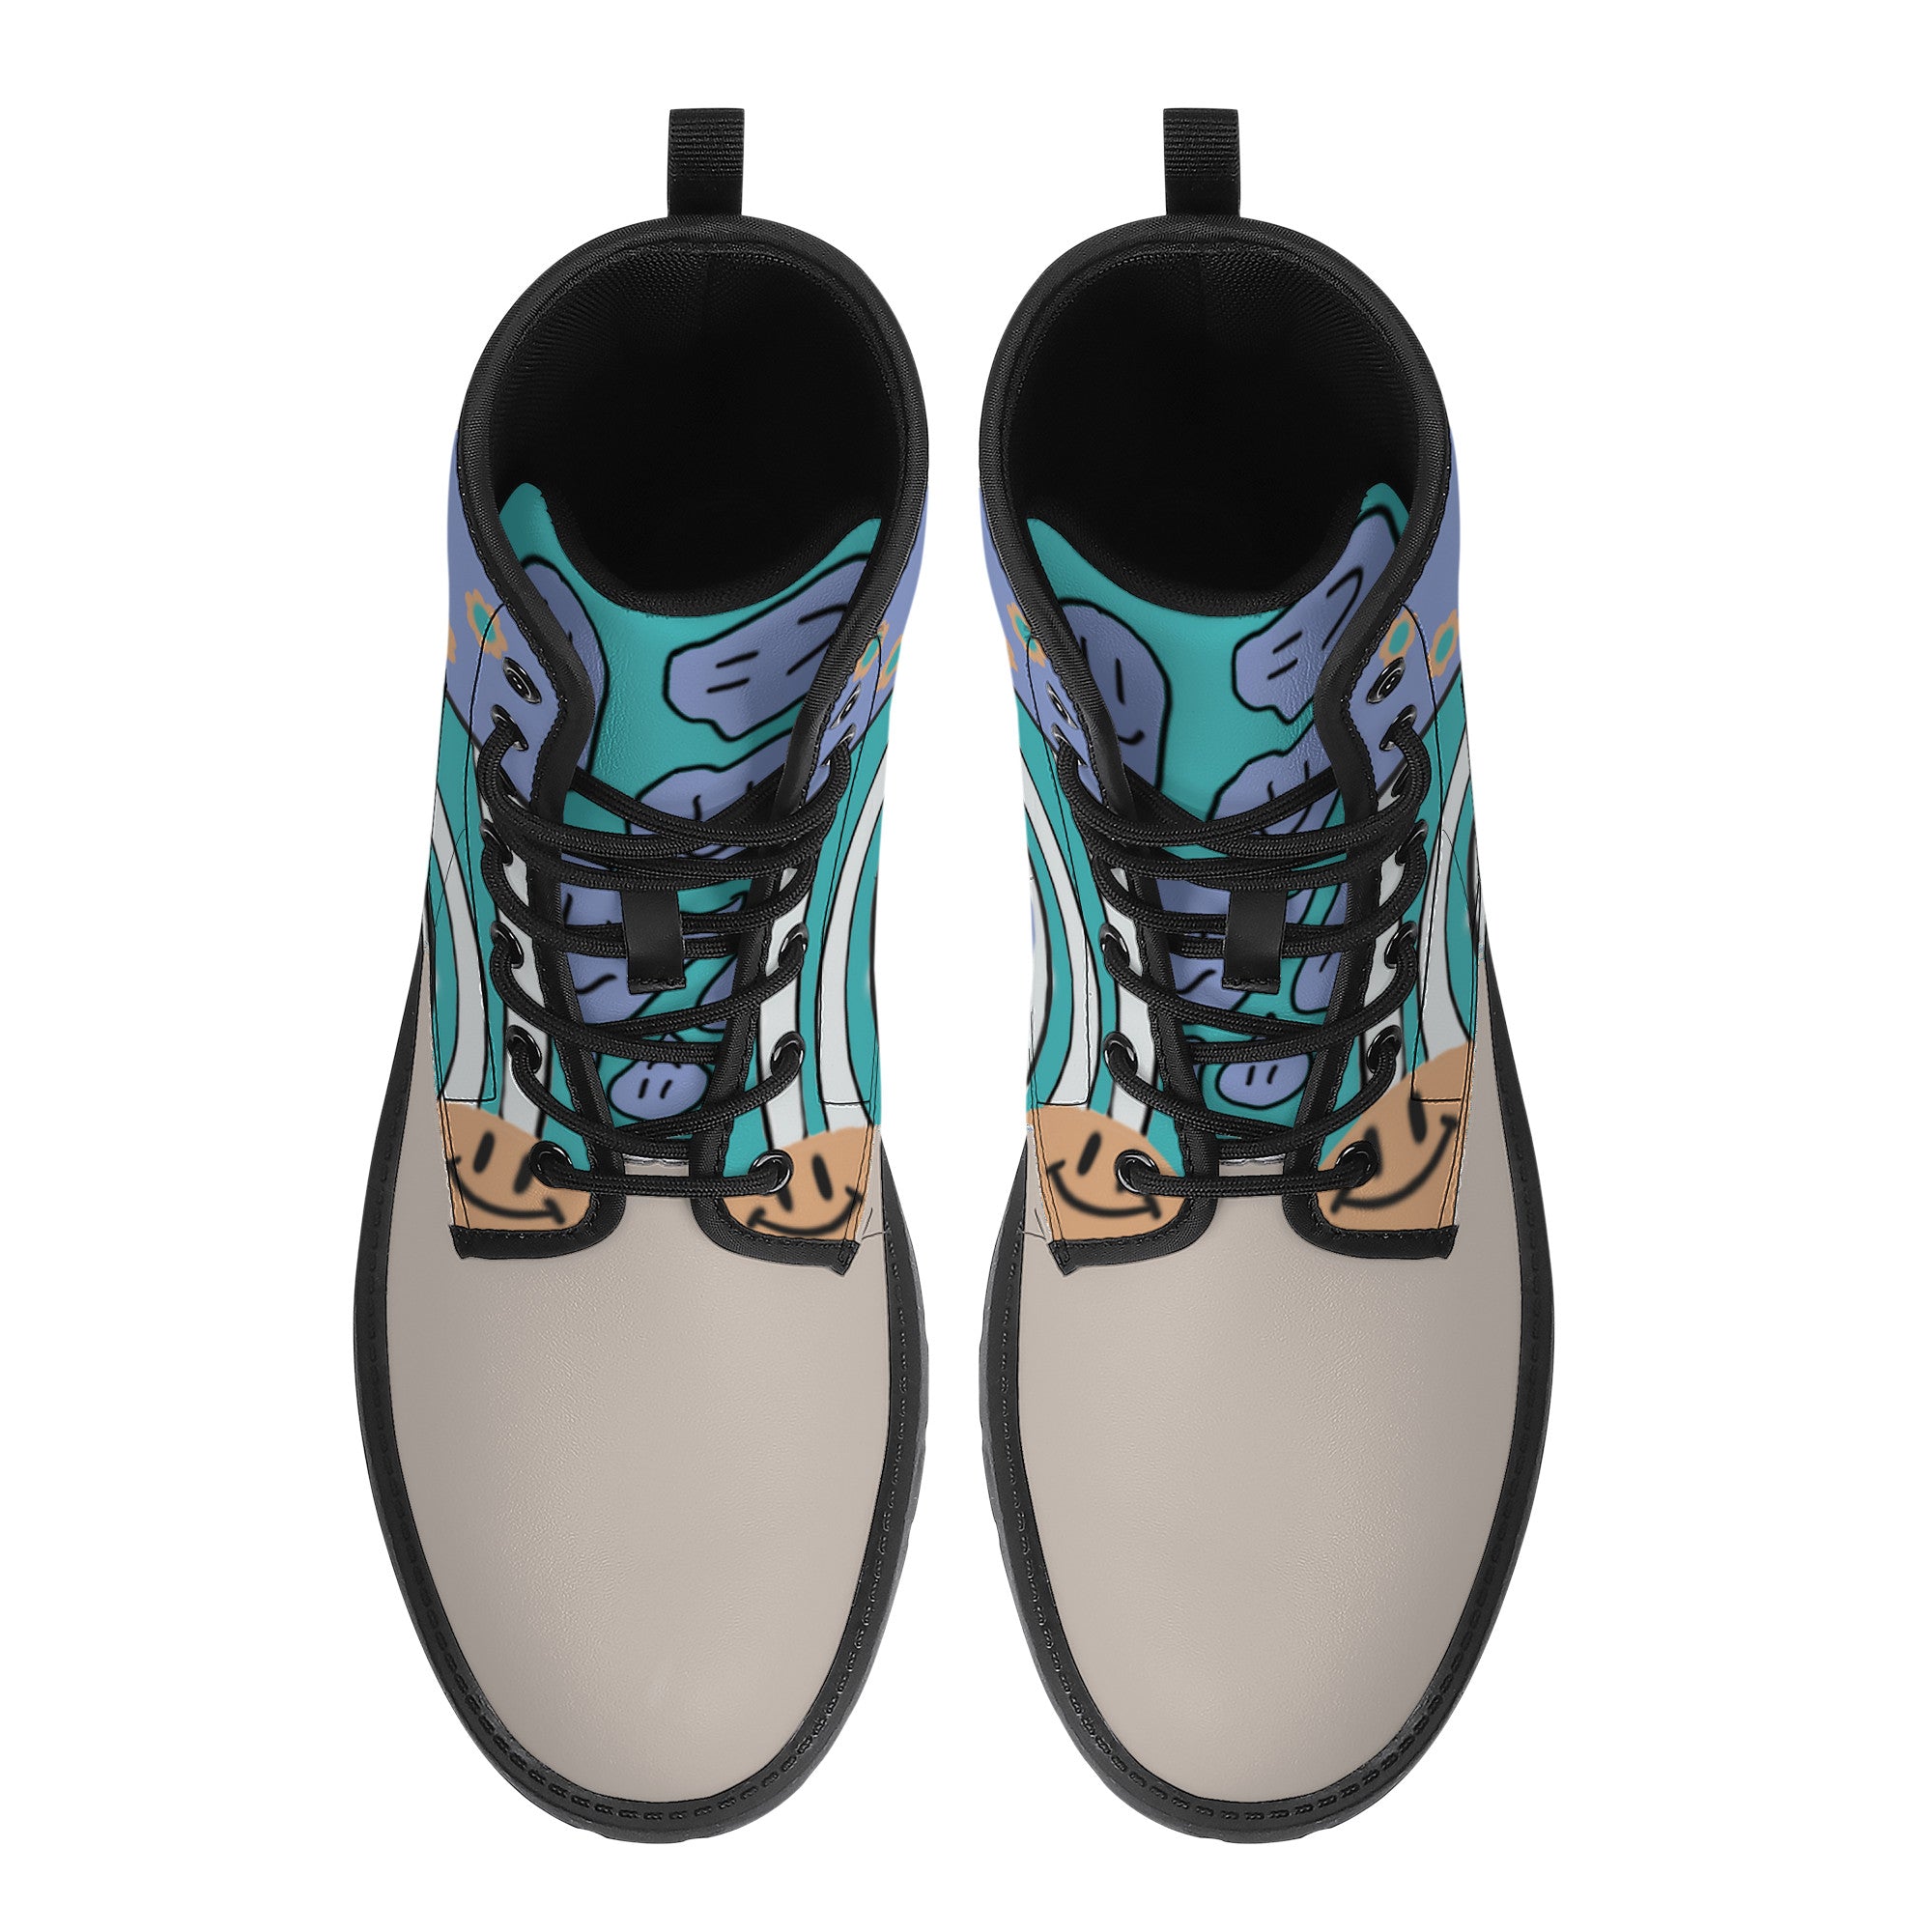 Cool shoes by Reya G | Boots Customized | Shoe Zero